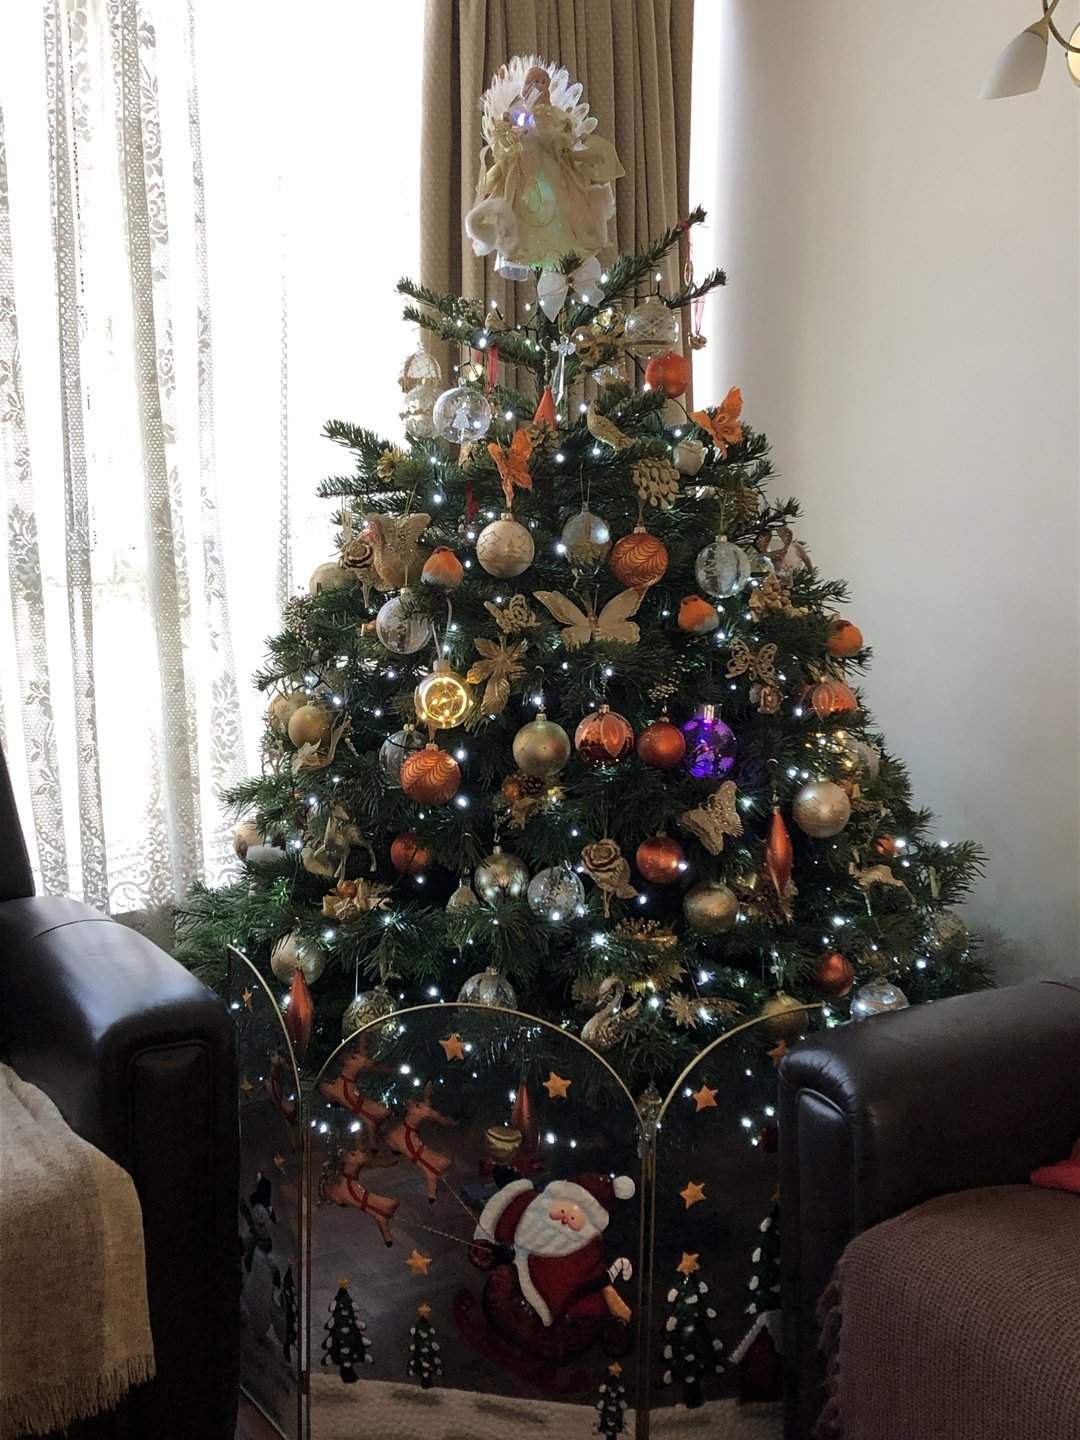 Premium Real Christmas Trees - Peterborough Christmas Trees